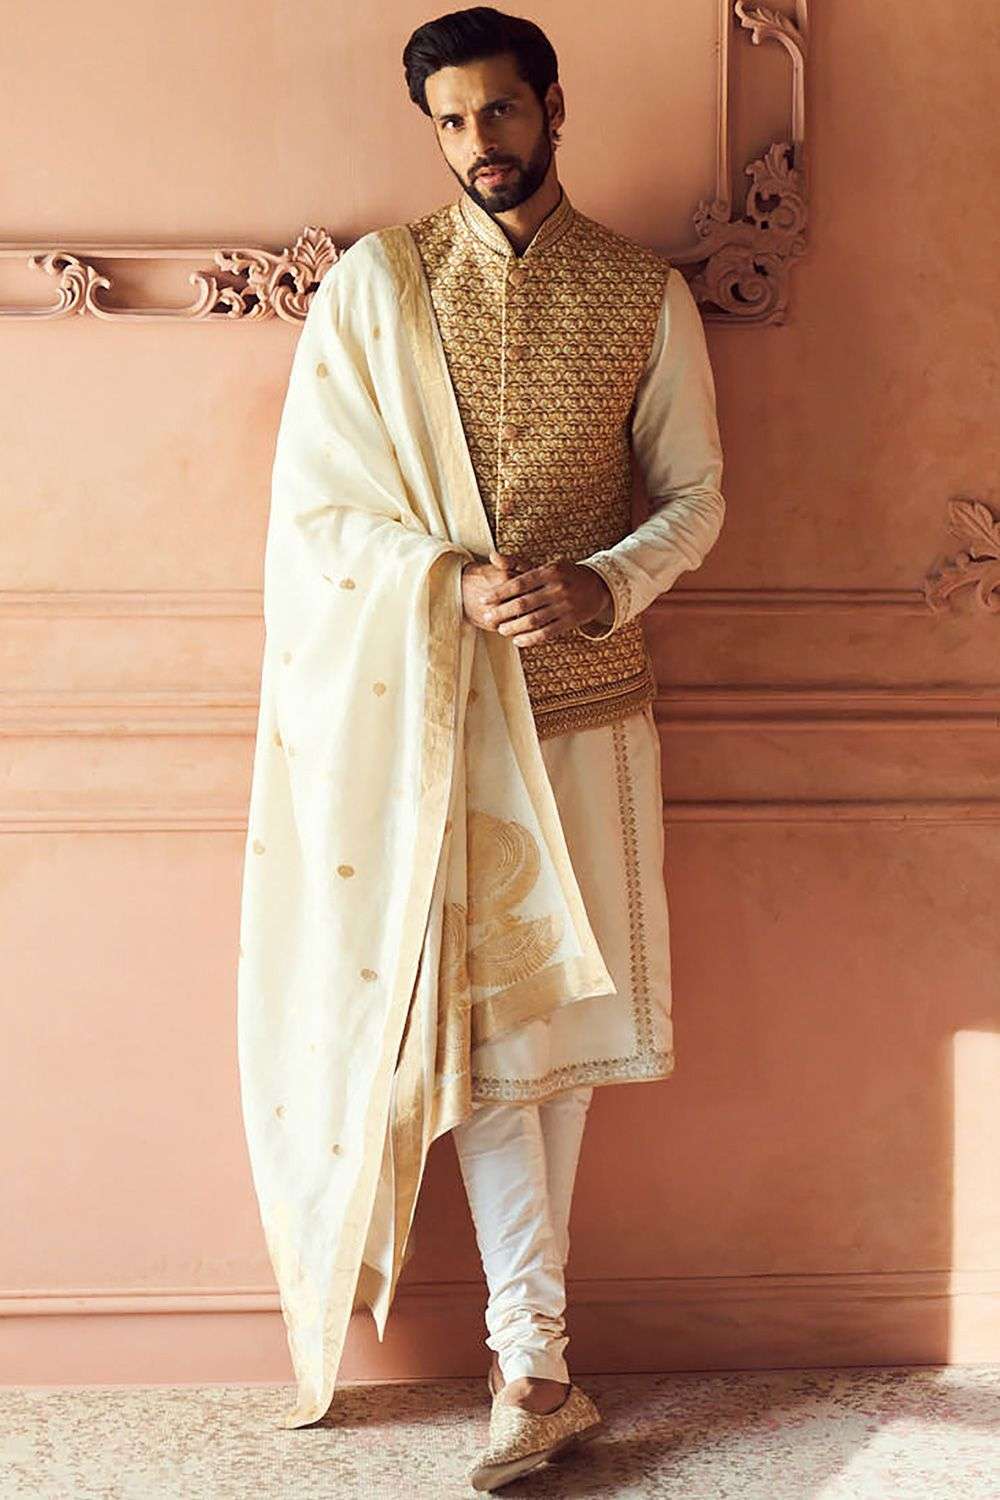 Handwoven Brocade Silk Scarf/Shawl India